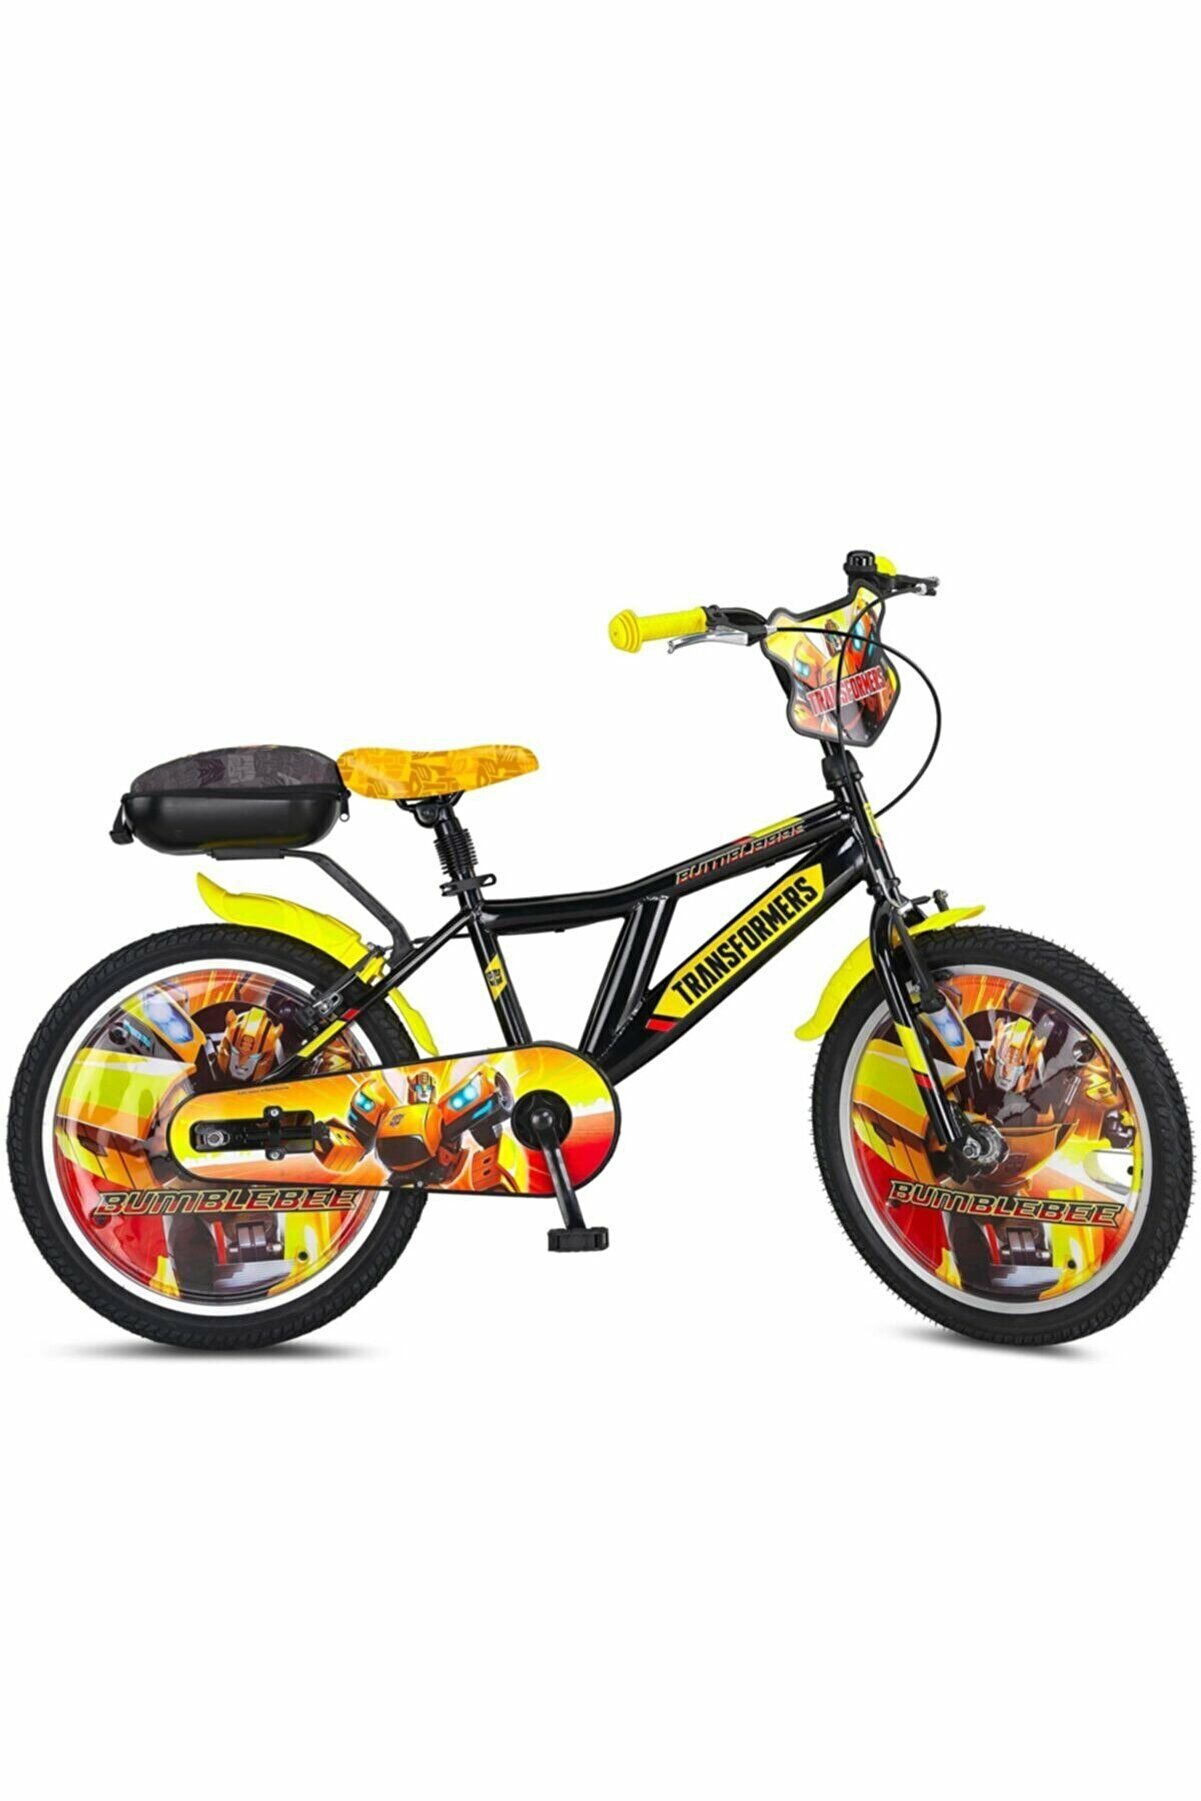 Ümit Bisiklet Transformers 20 Jant (120-135 cm Boy) 2004 BMX-V Lisanslı Erkek Çocuk Bisikleti